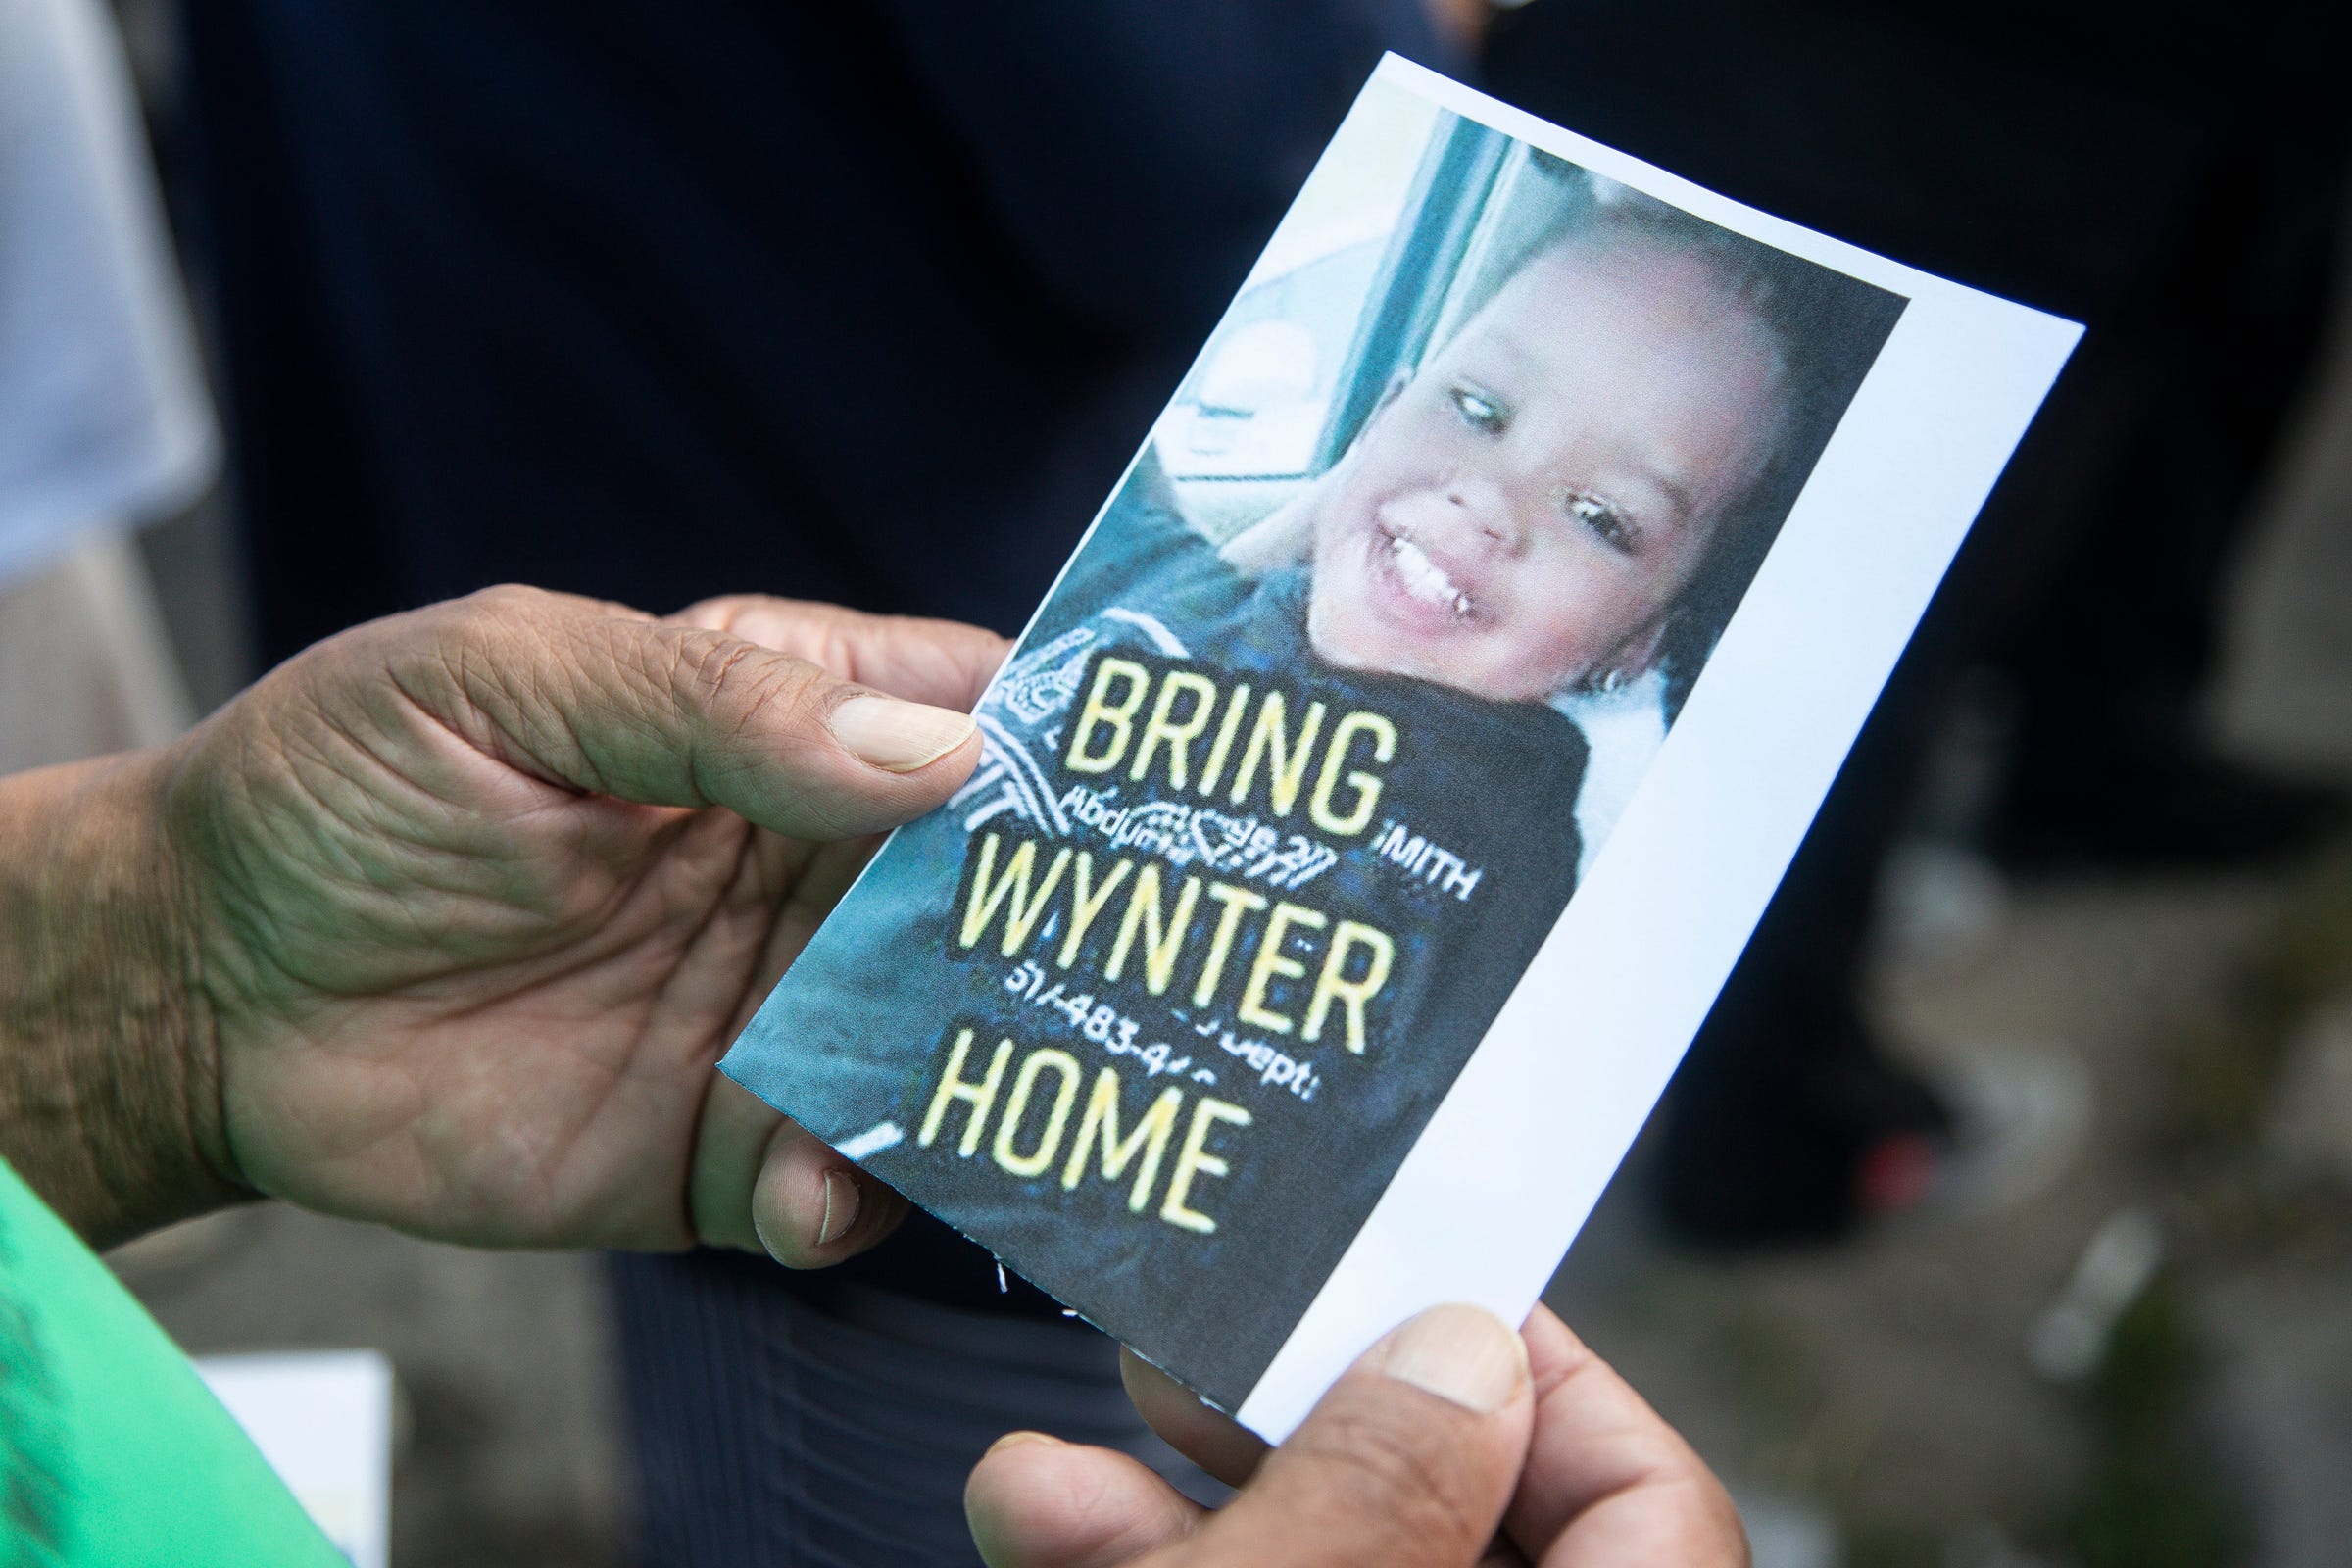 Michigan man strangled missing 2-year-old, federal prosecutors say